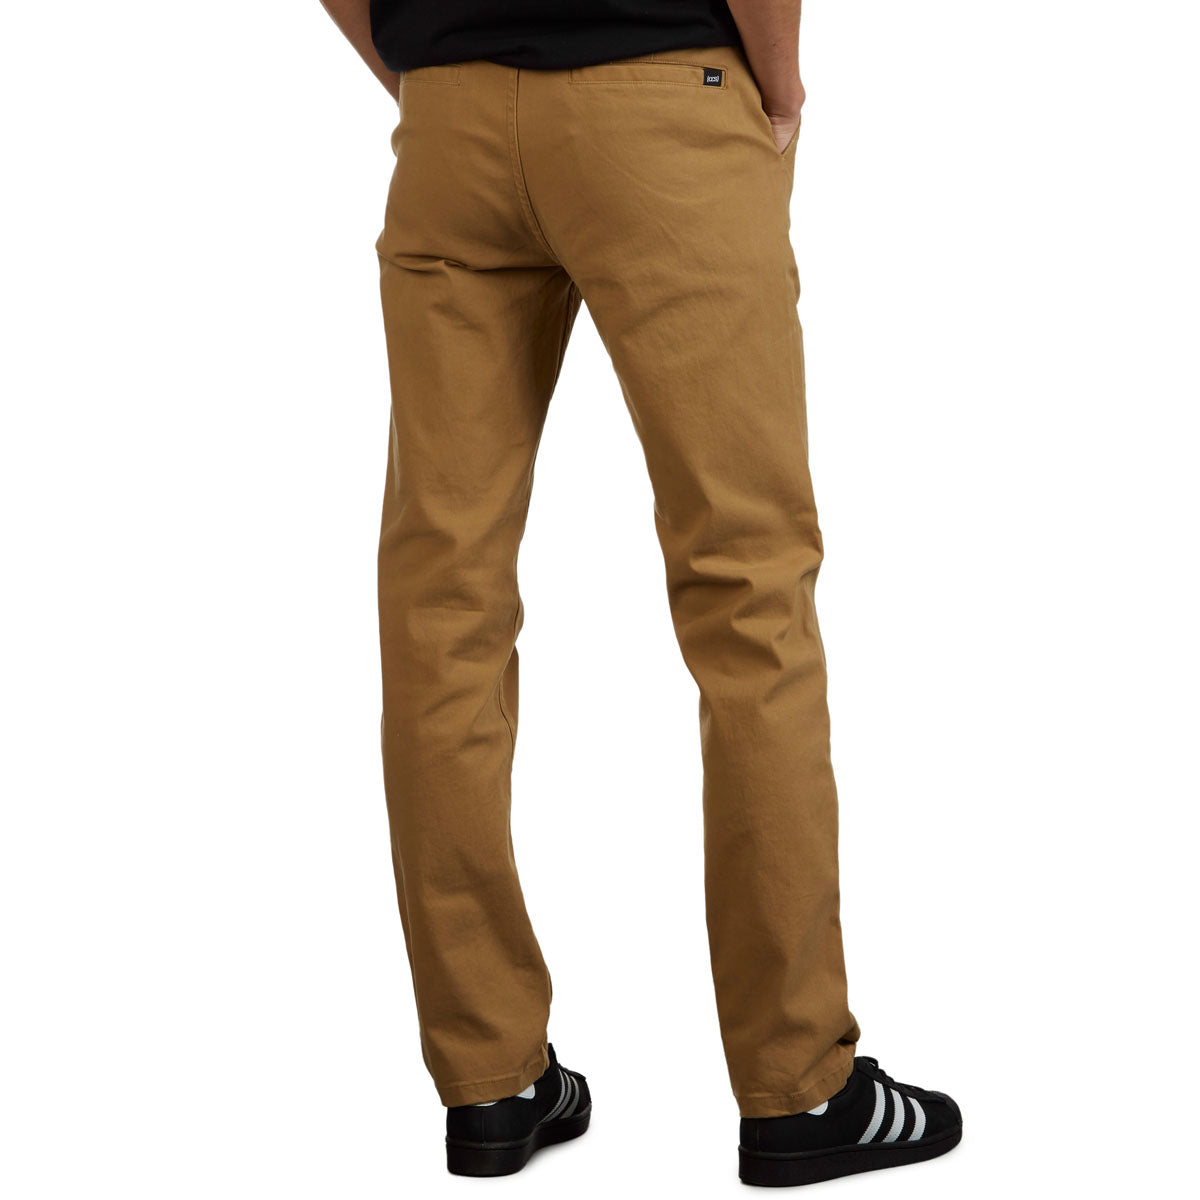 CCS Standard Plus Slim Chino Pants - Khaki image 3